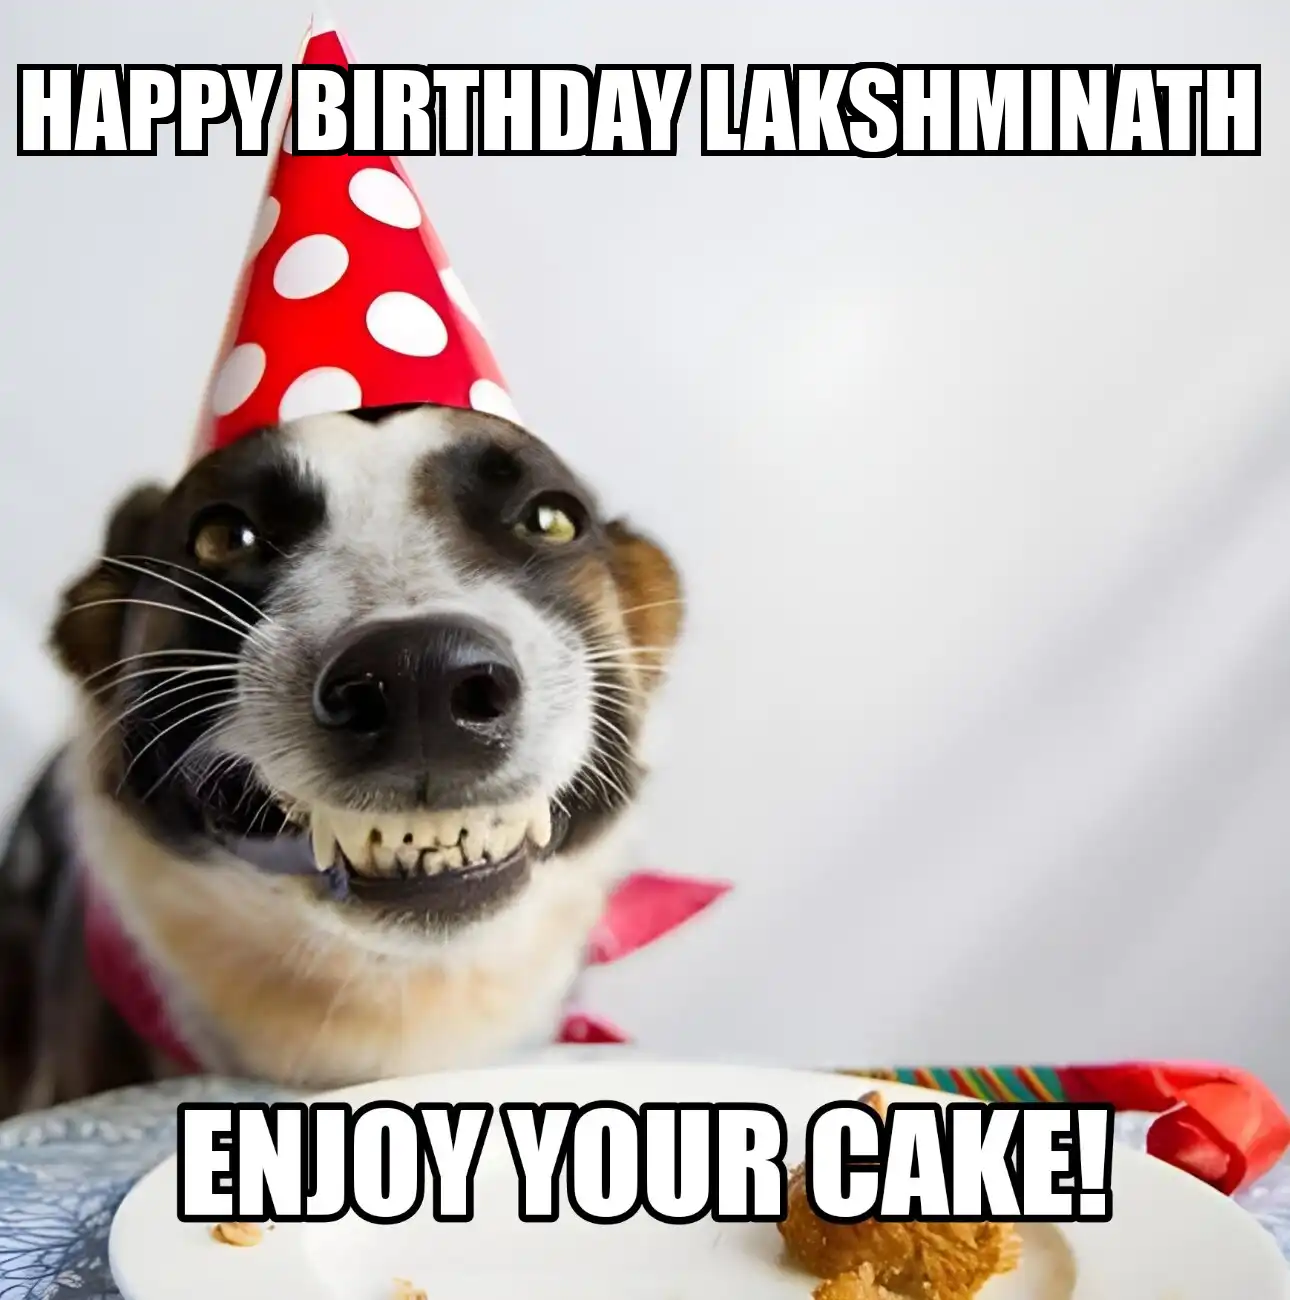 Happy Birthday Lakshminath Enjoy Your Cake Dog Meme